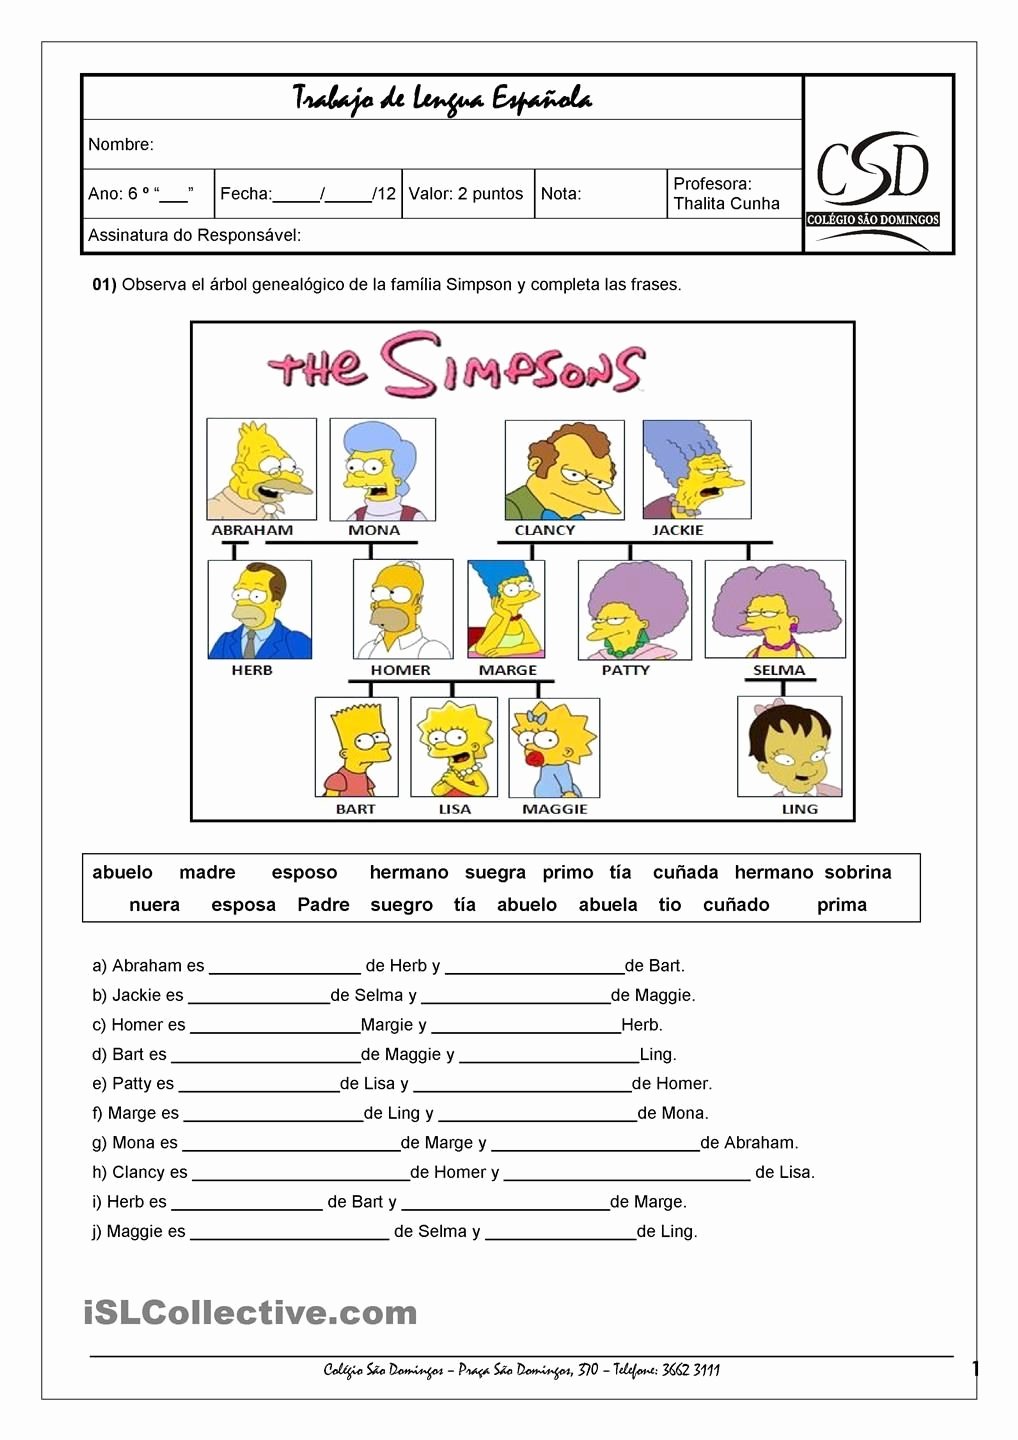 Spanish Family Tree Worksheet Unique Simpsons Family Tree Worksheet Spanish